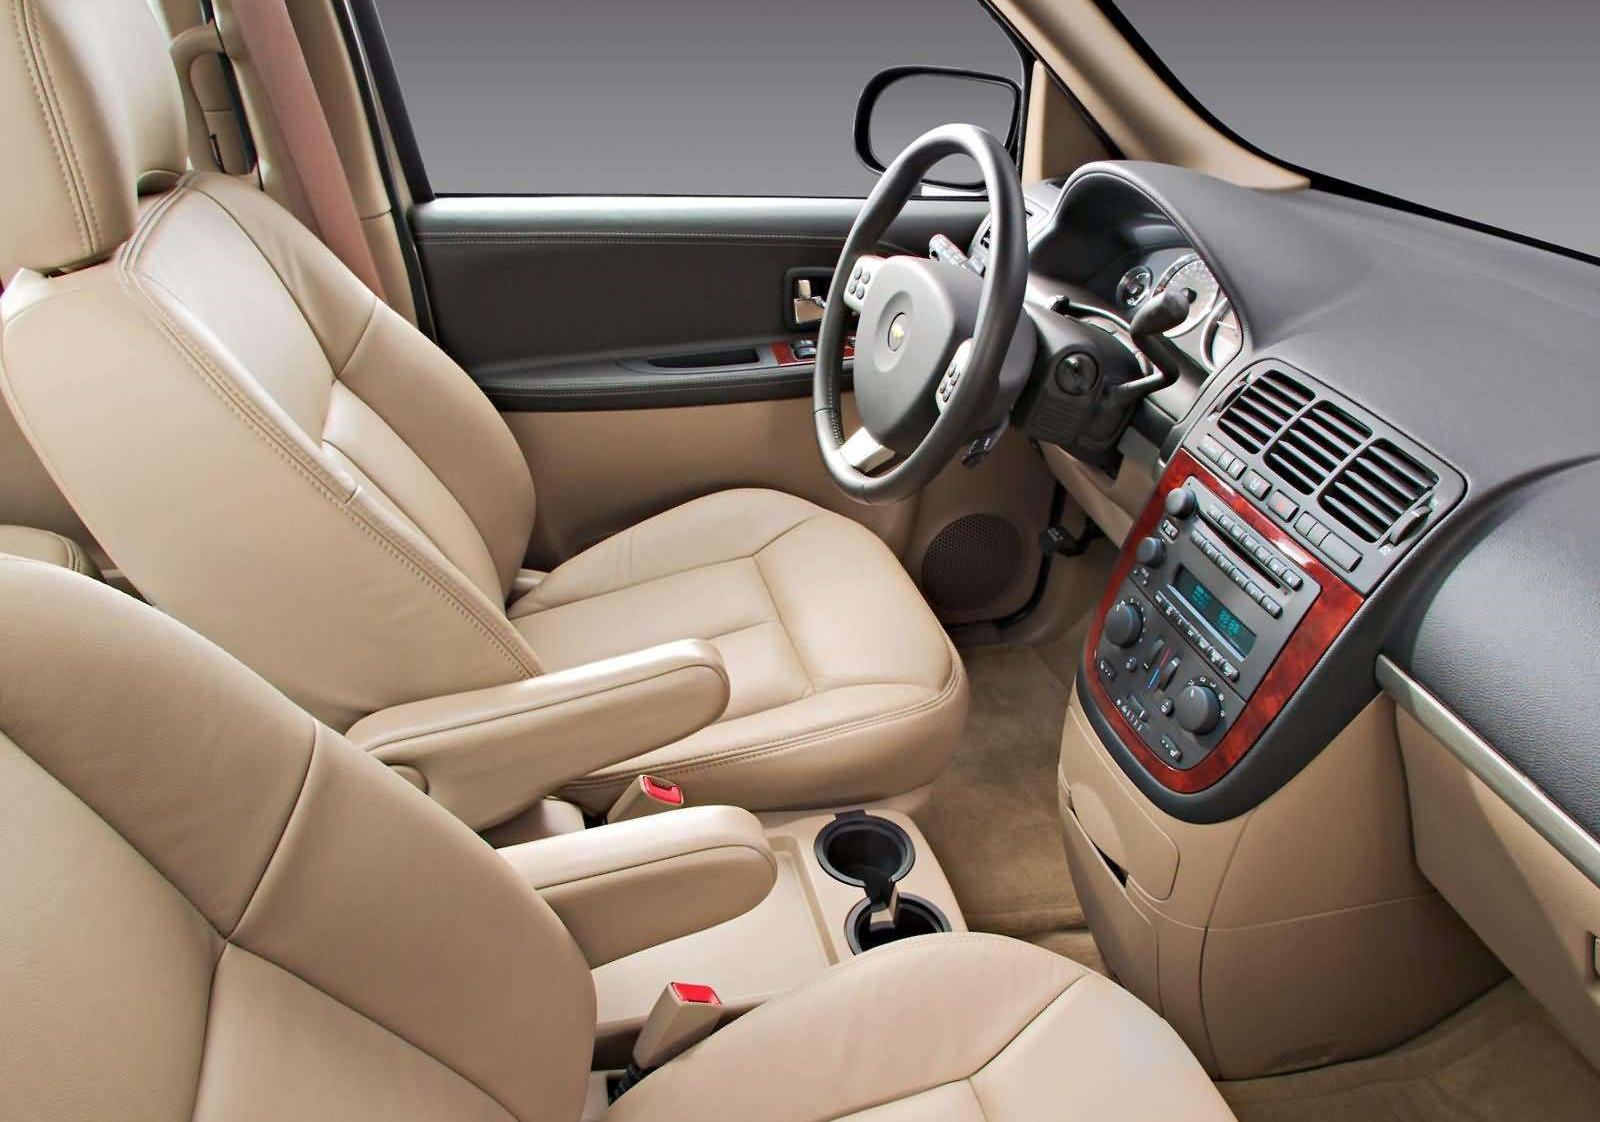 2008 Chevrolet Uplander Dashboard